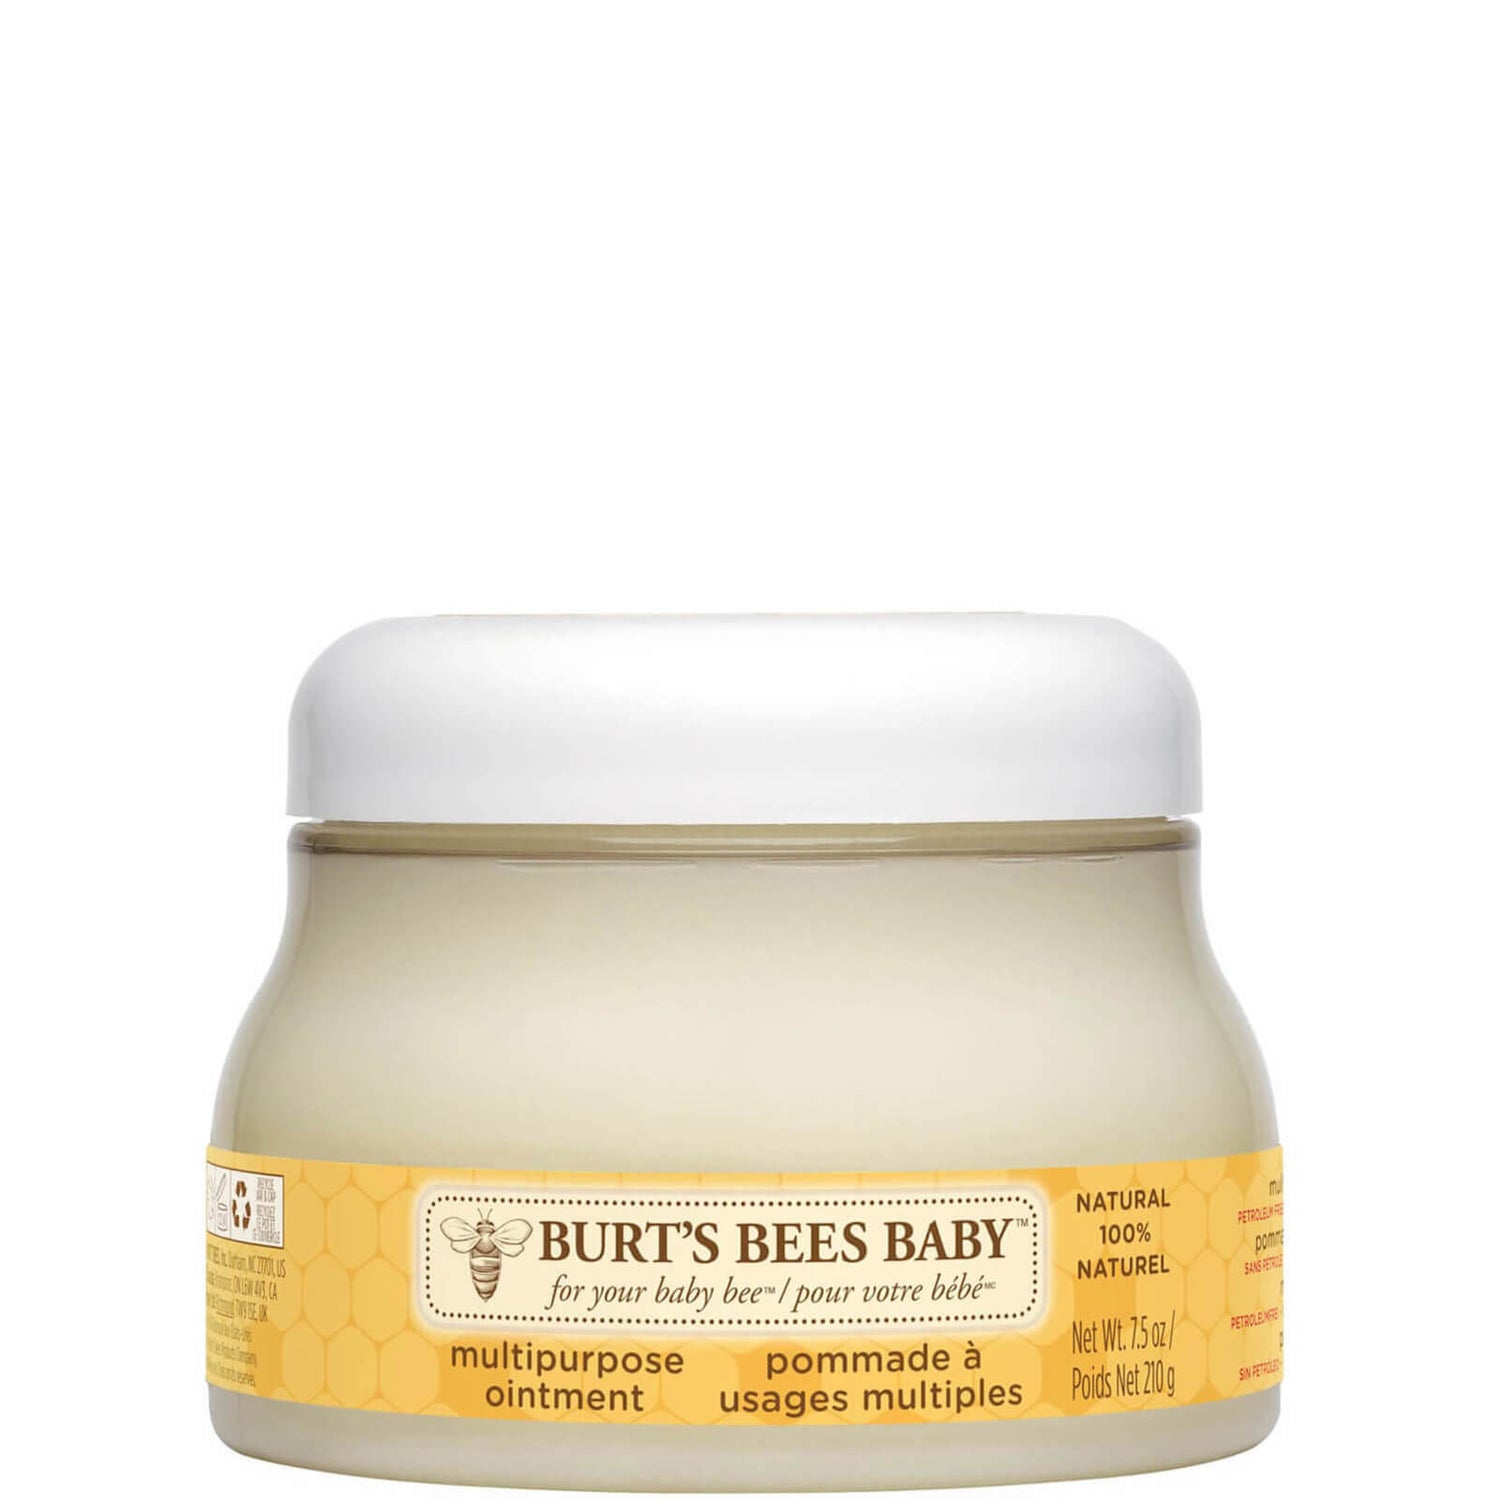 Burt's Bees Baby Multipurpose Ointment 210g